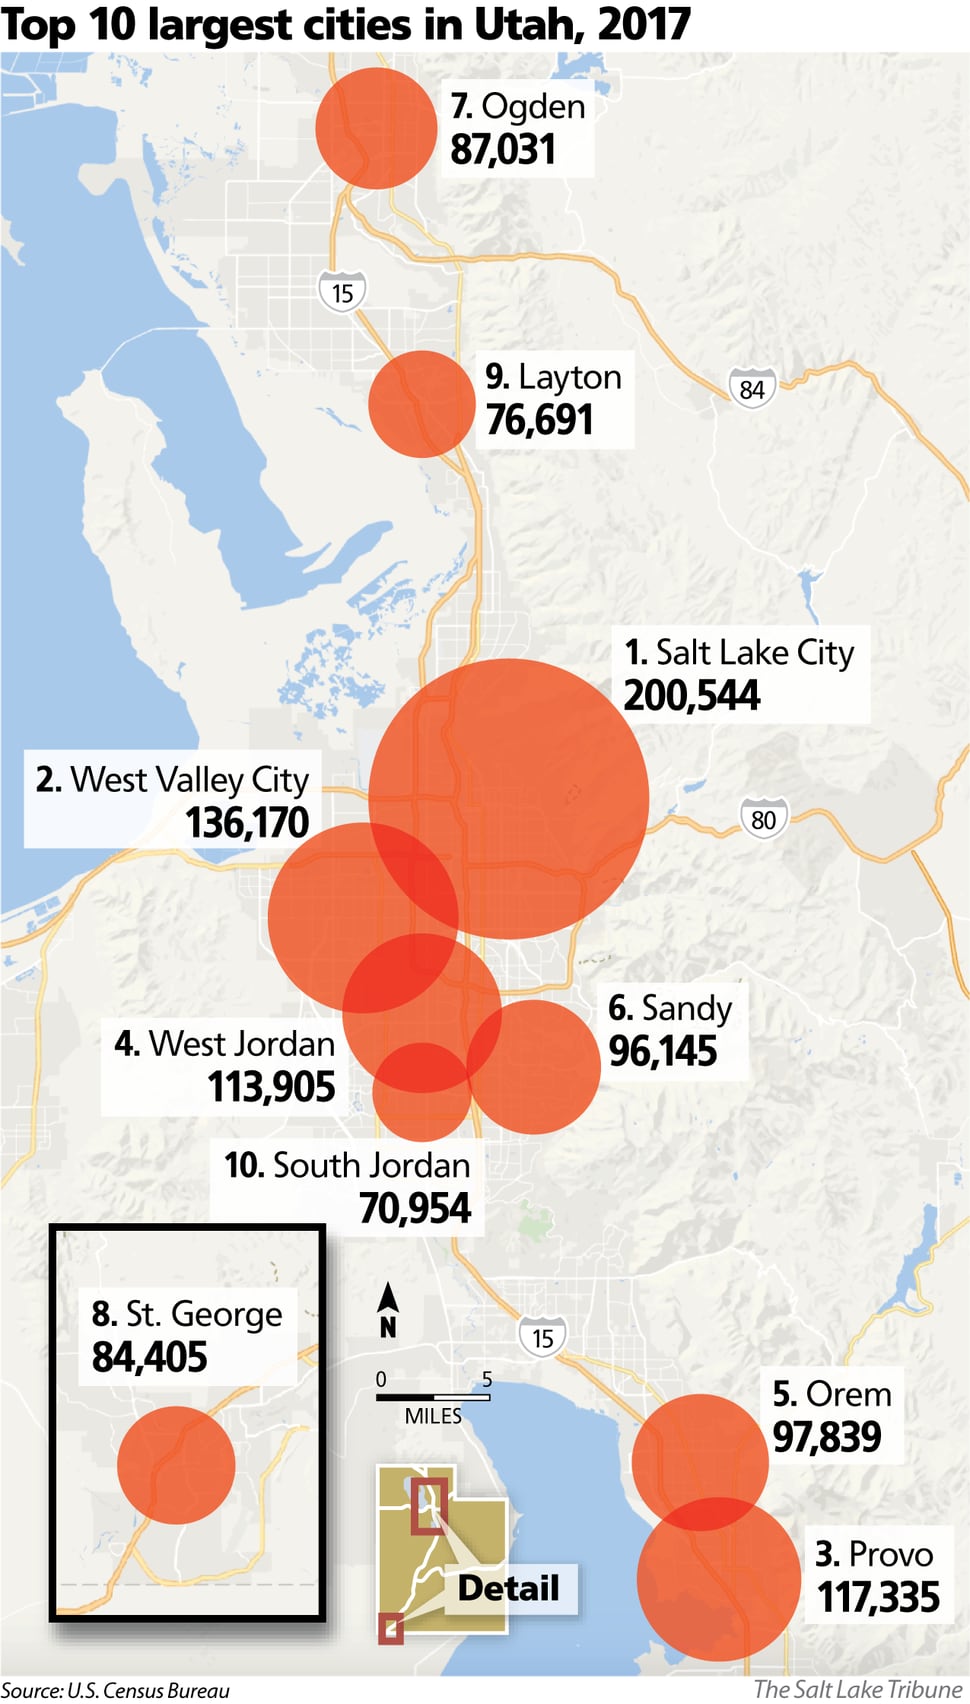 Census says fastgrowing Salt Lake City passes the 200,000 resident